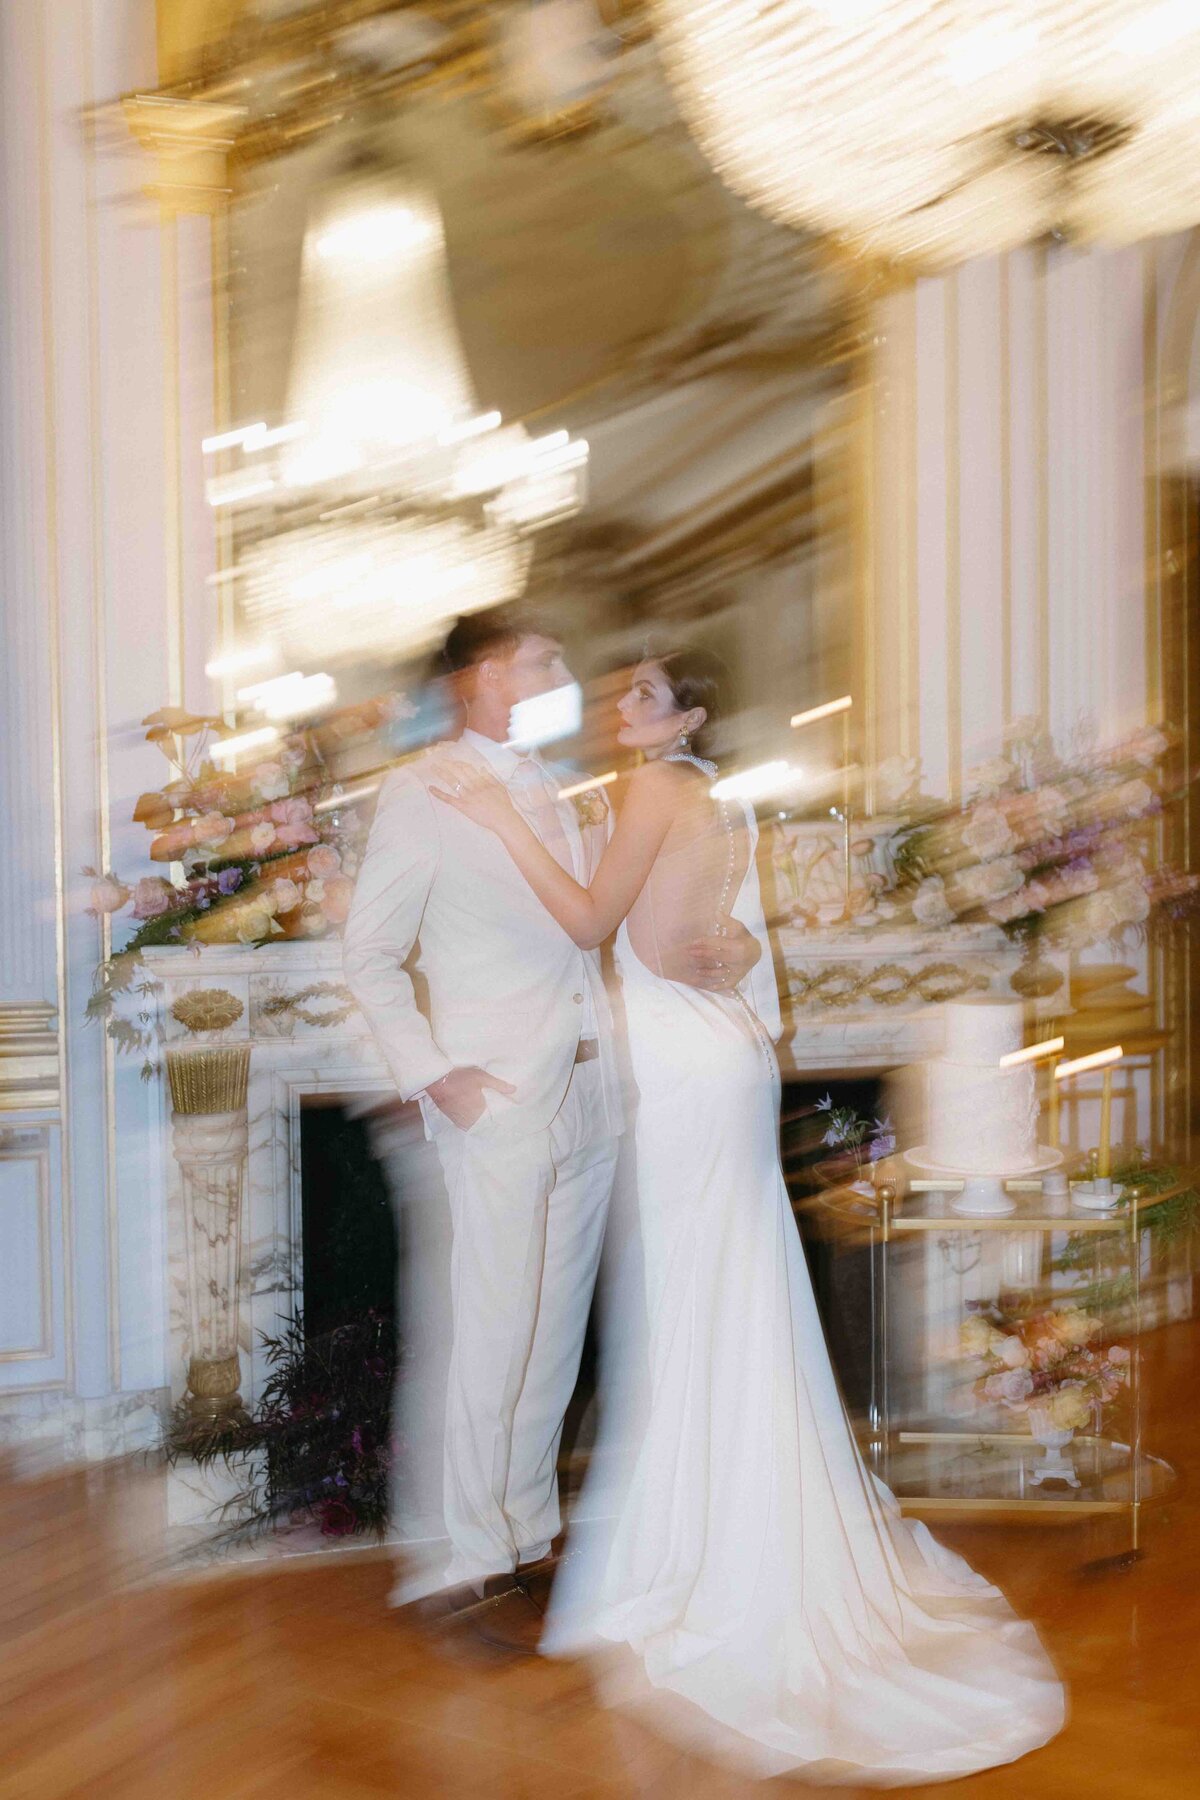 dramatic-blurry-wedding-photo